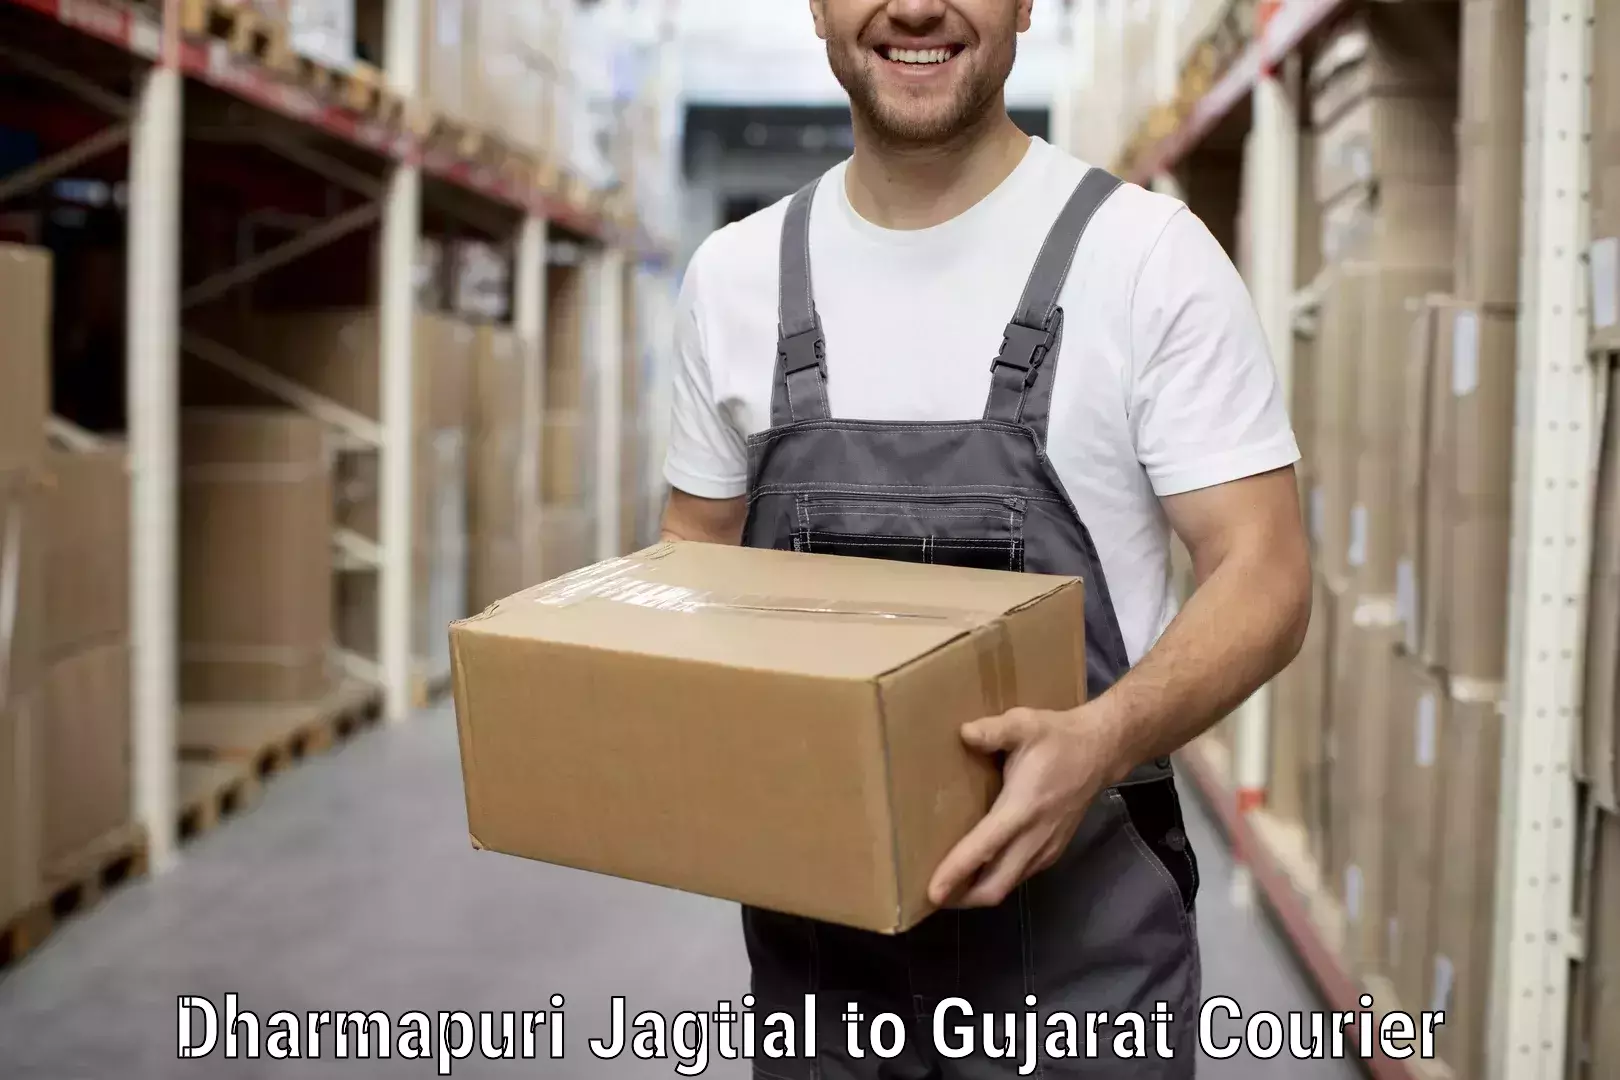 Furniture moving experts Dharmapuri Jagtial to Jamjodhpur